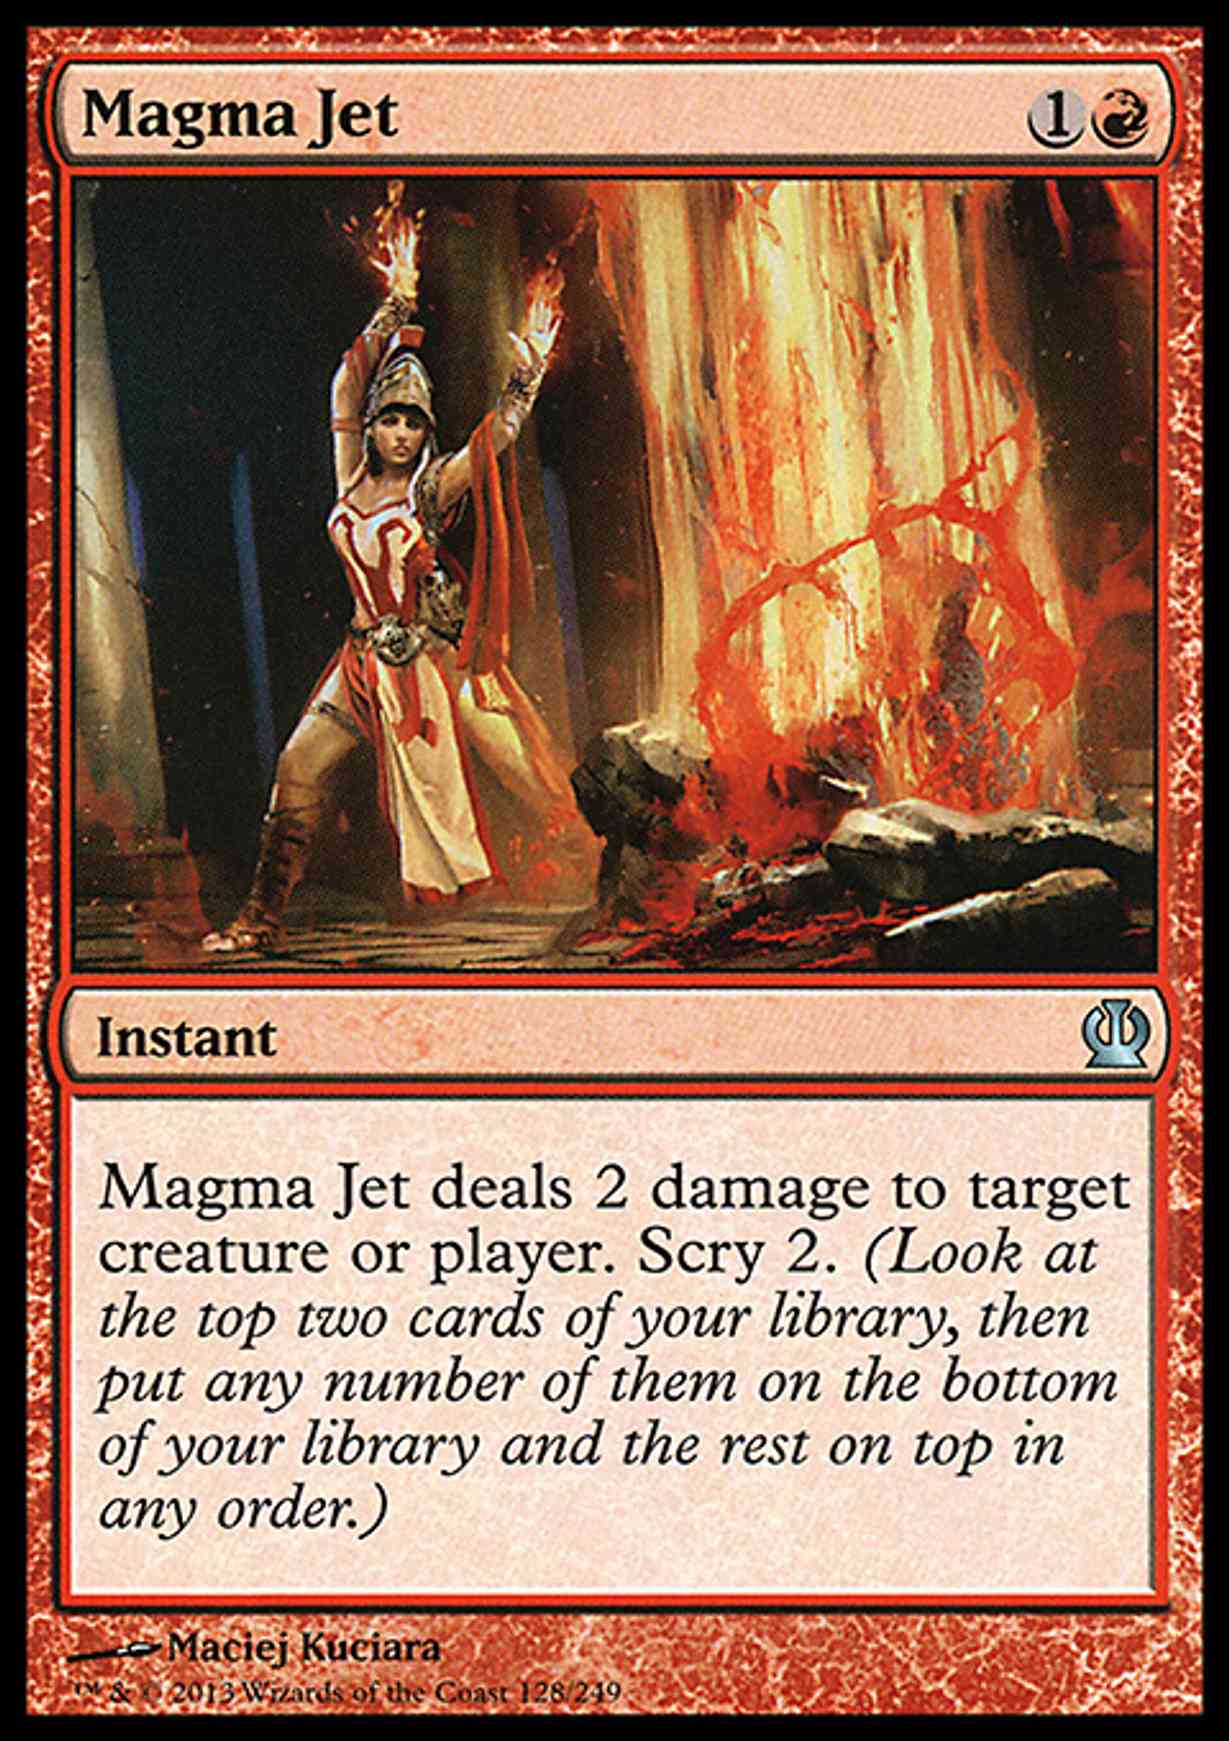 Magma Jet magic card front